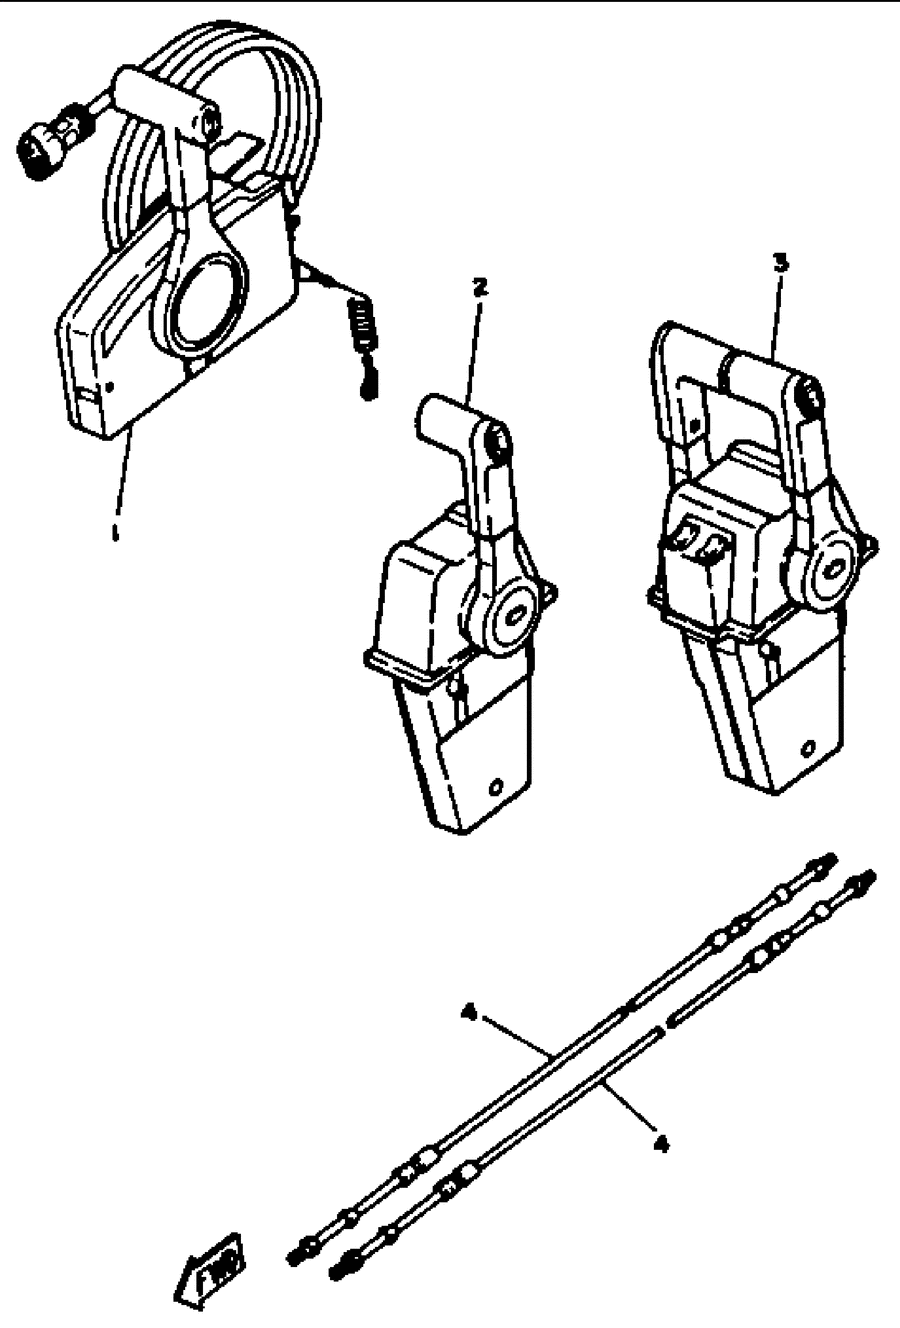 1991 L150TXRP REMOTE CONTROL CABLES